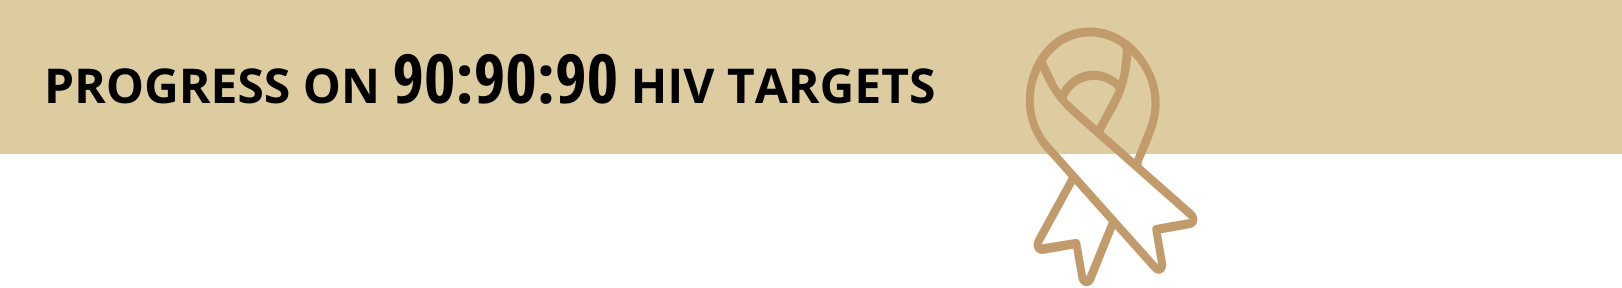 PROGRESS ON 90:90:90 HIV TARGETS